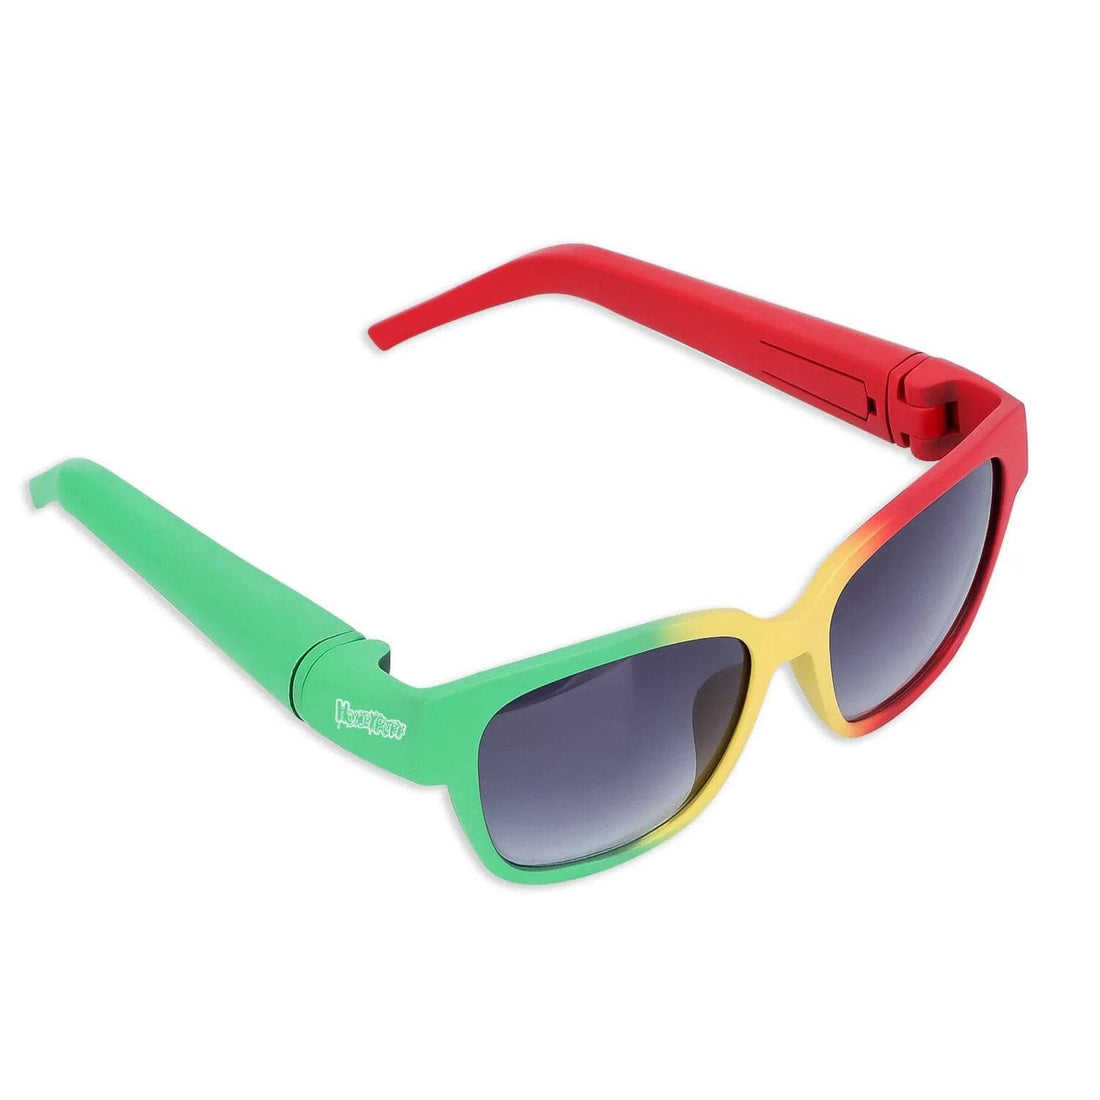 Rave Essentials Co. t3 Secret Compartment Stash Sunglasses